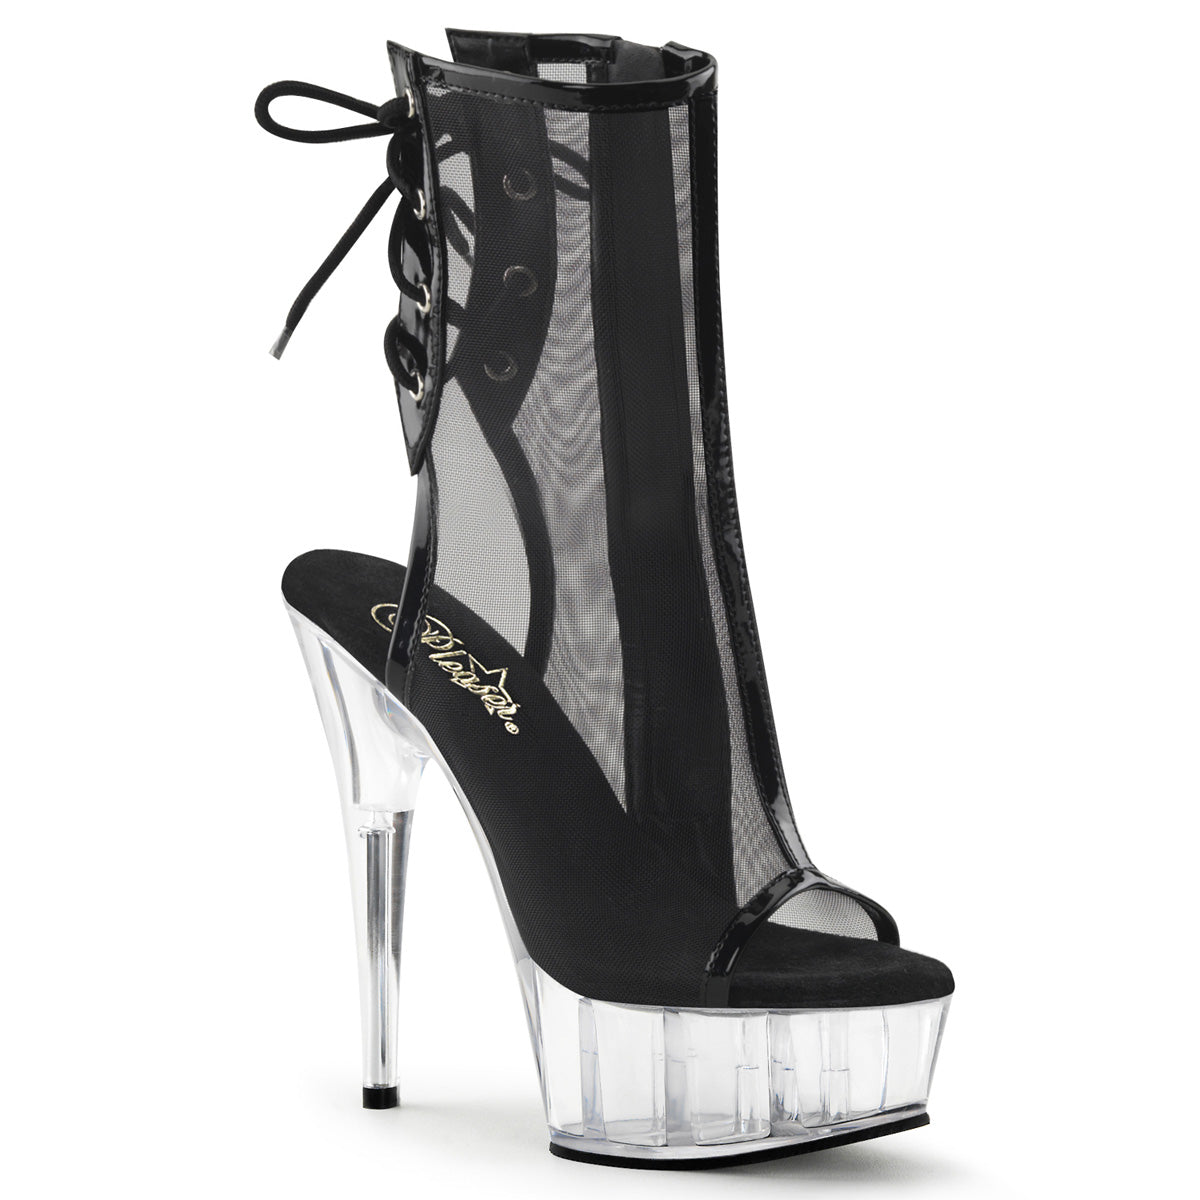 DELIGHT-1018MSH Pleaser 6" Heel Black Pole Dancing Platforms-Pleaser- Sexy Shoes